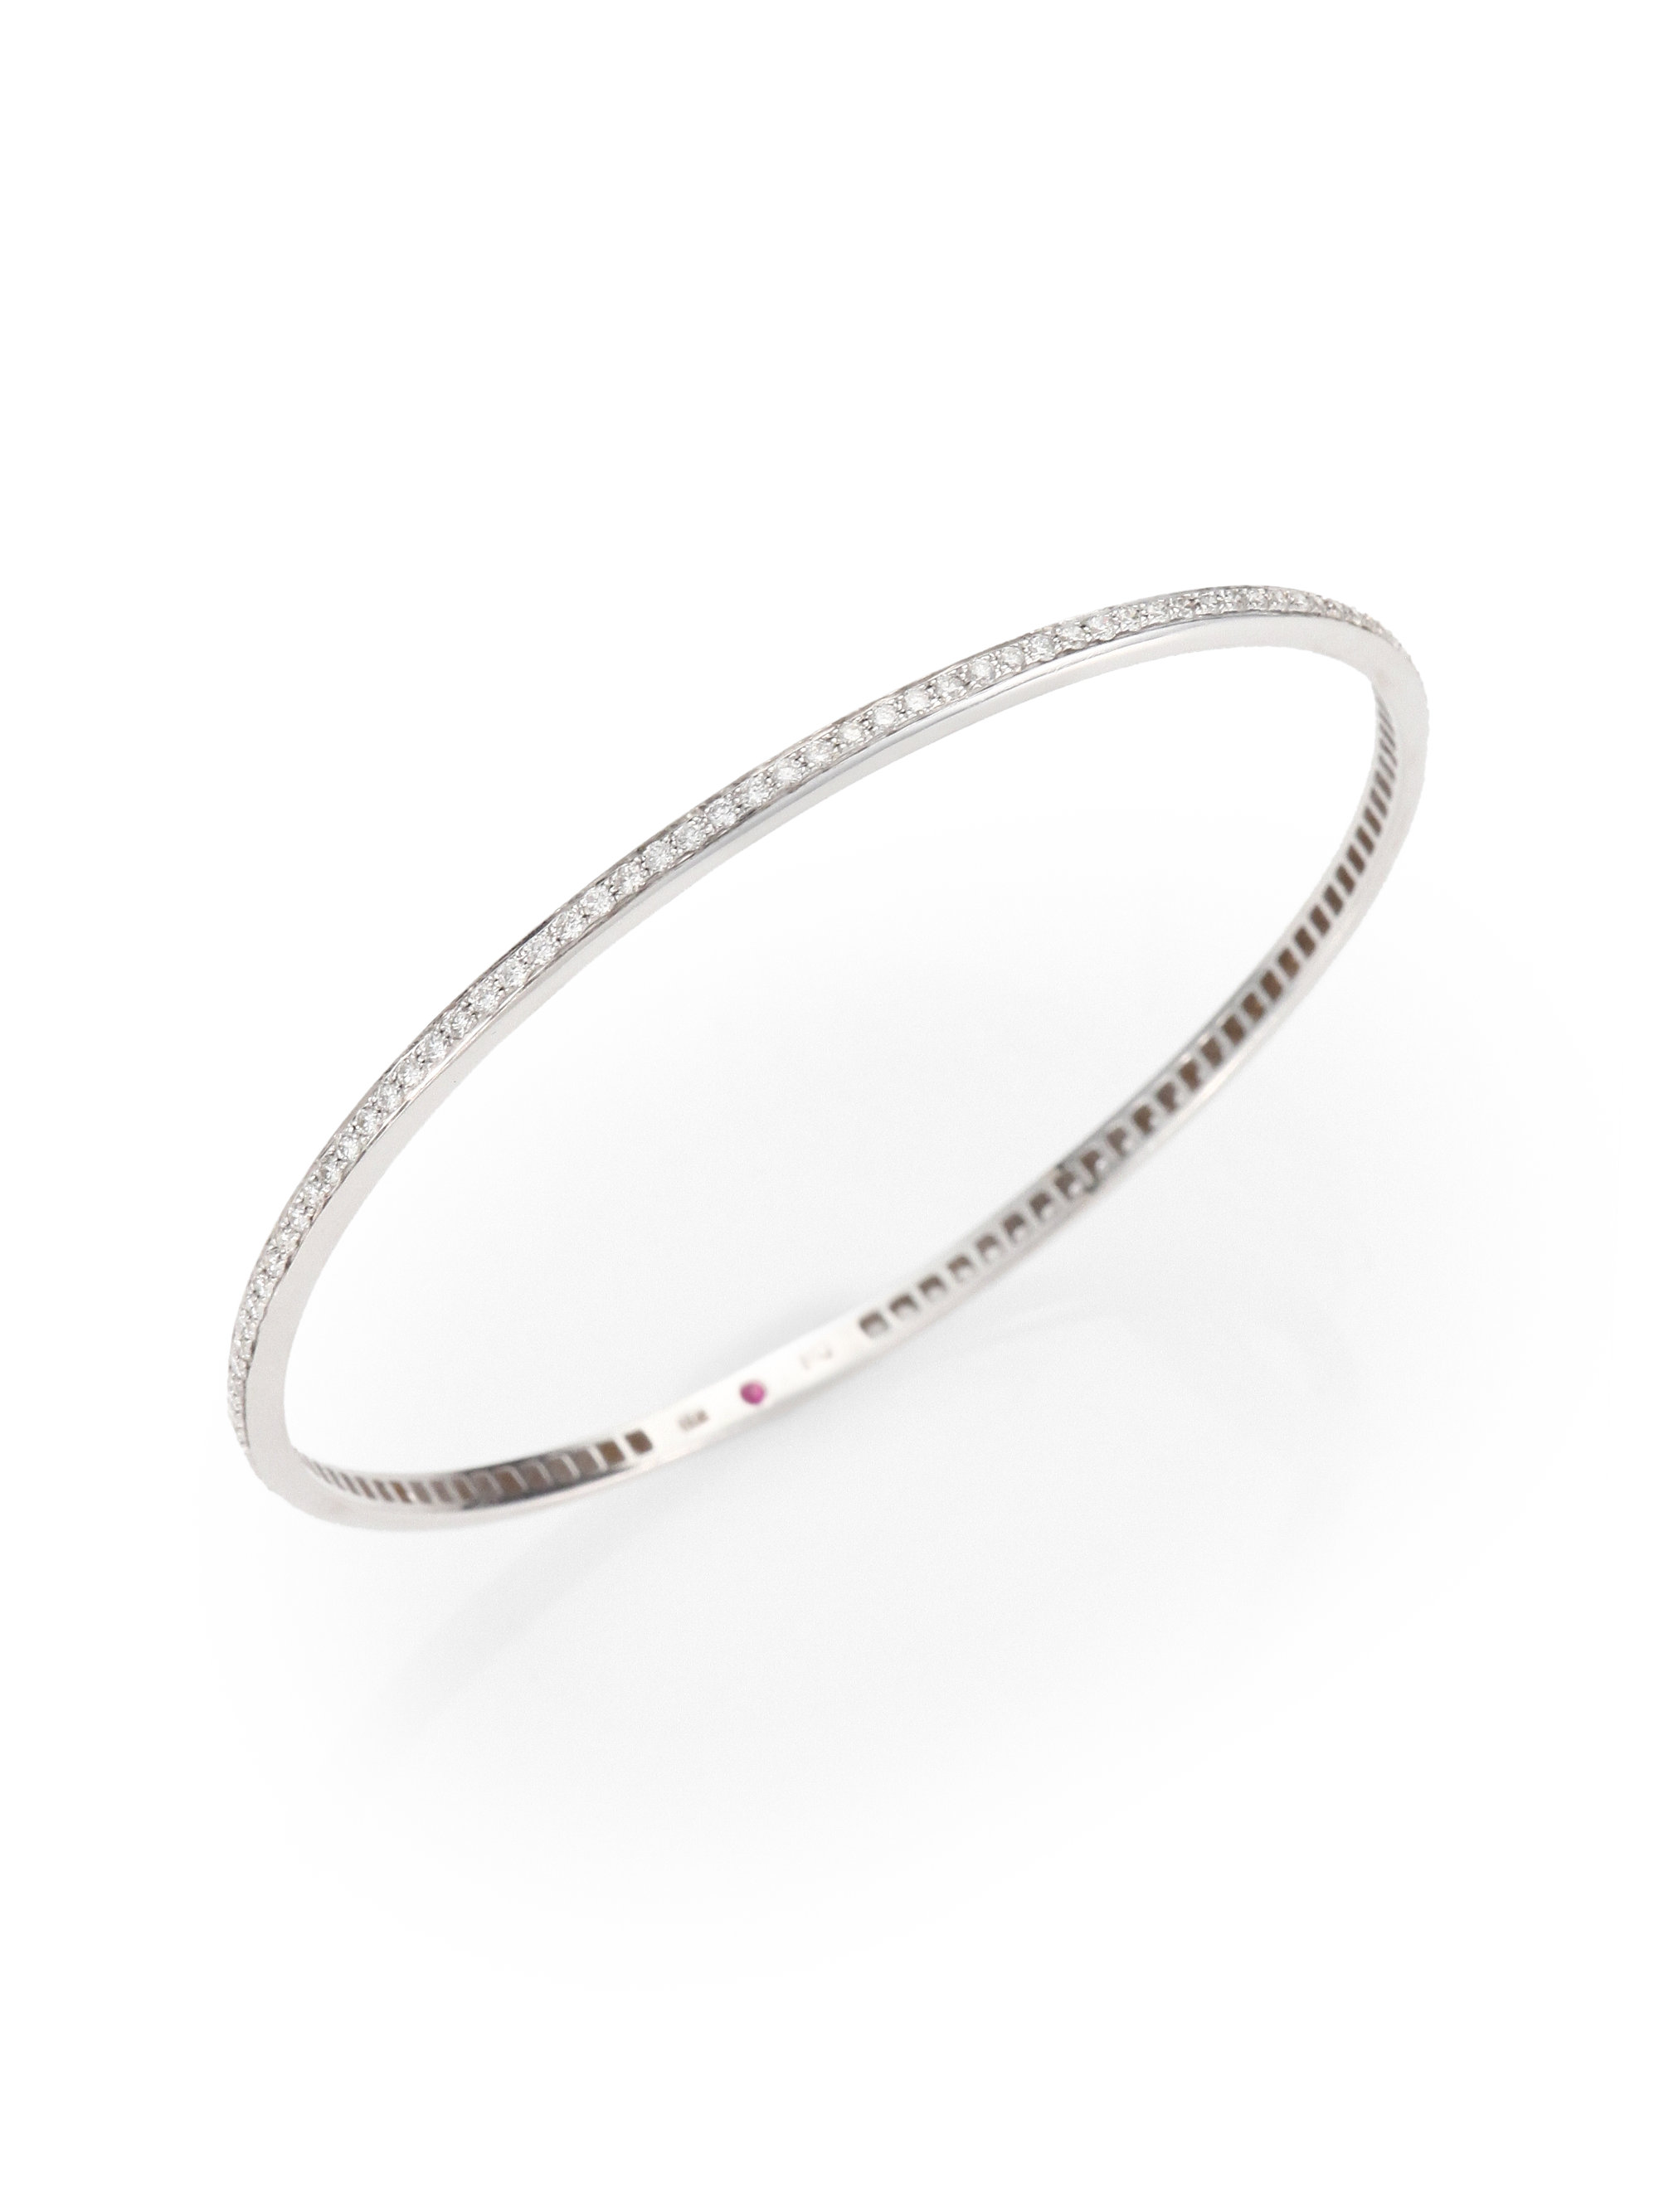 roberto-coin-white-gold-18k-white-gold-diamond-bangle-bracelet-product ...